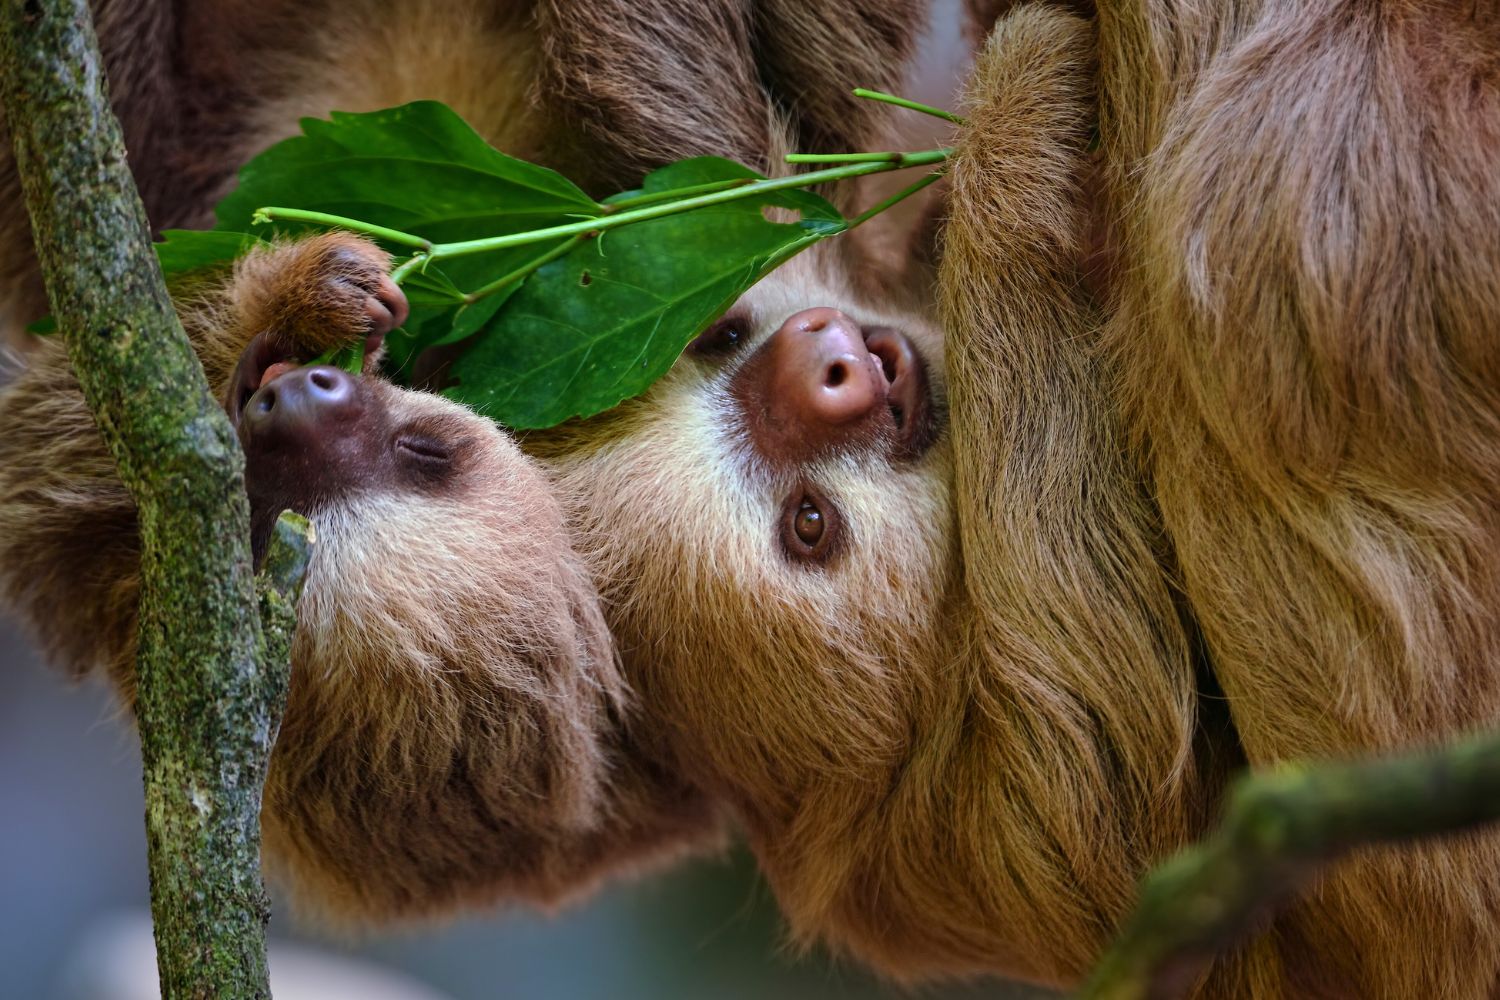 10. Sloths need protection.